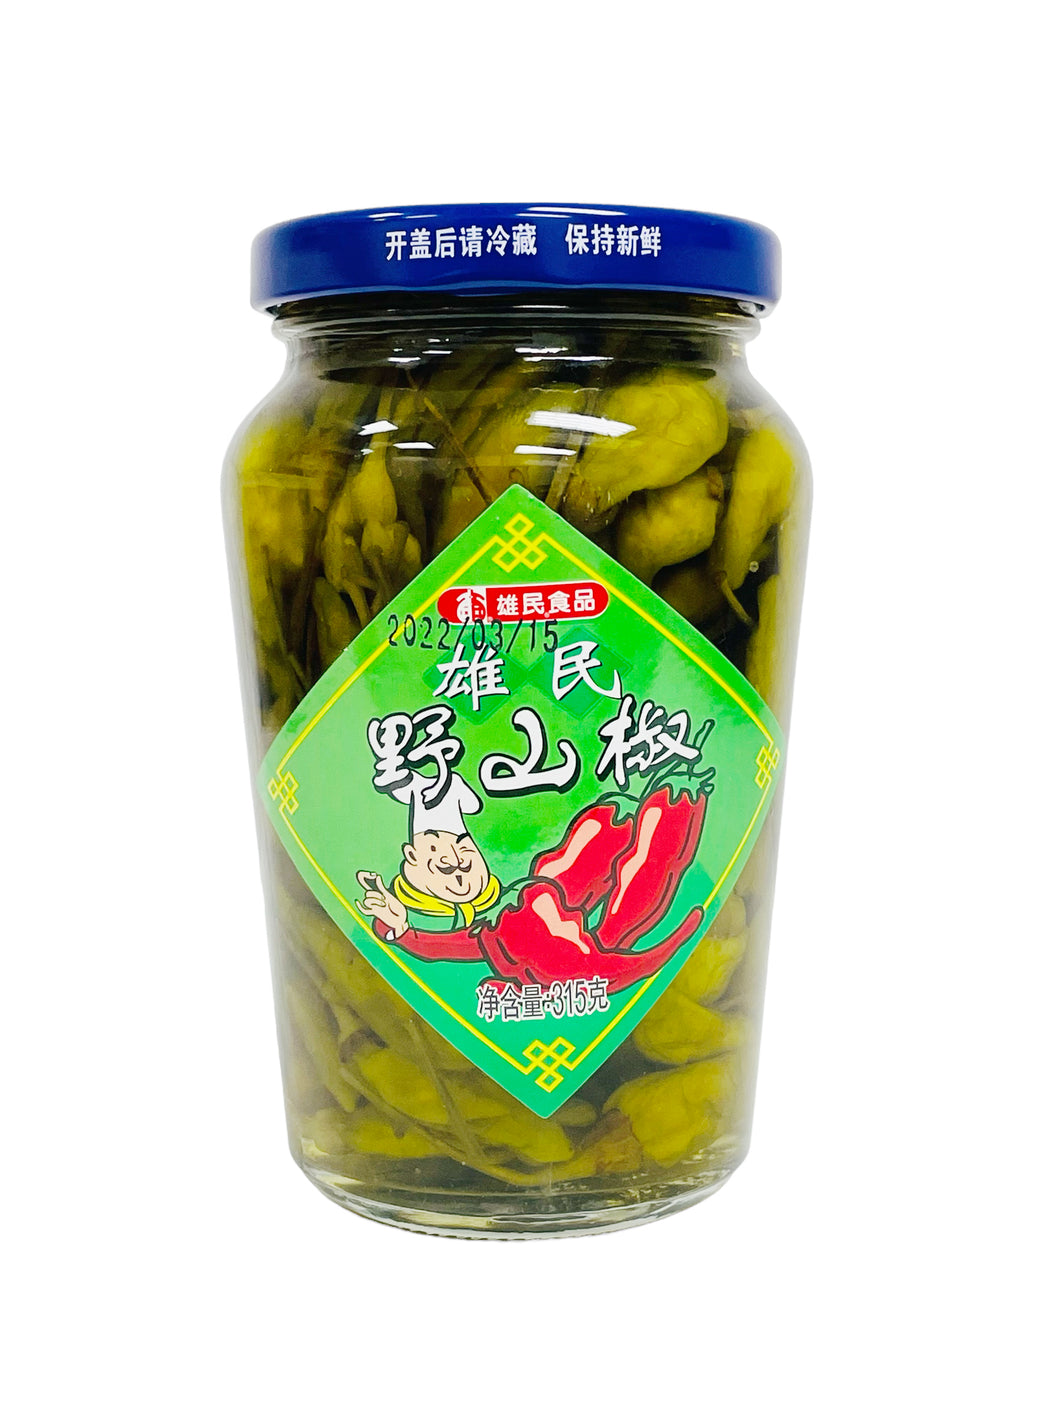 XM Whole Pickled Chili 315g 雄民野山椒